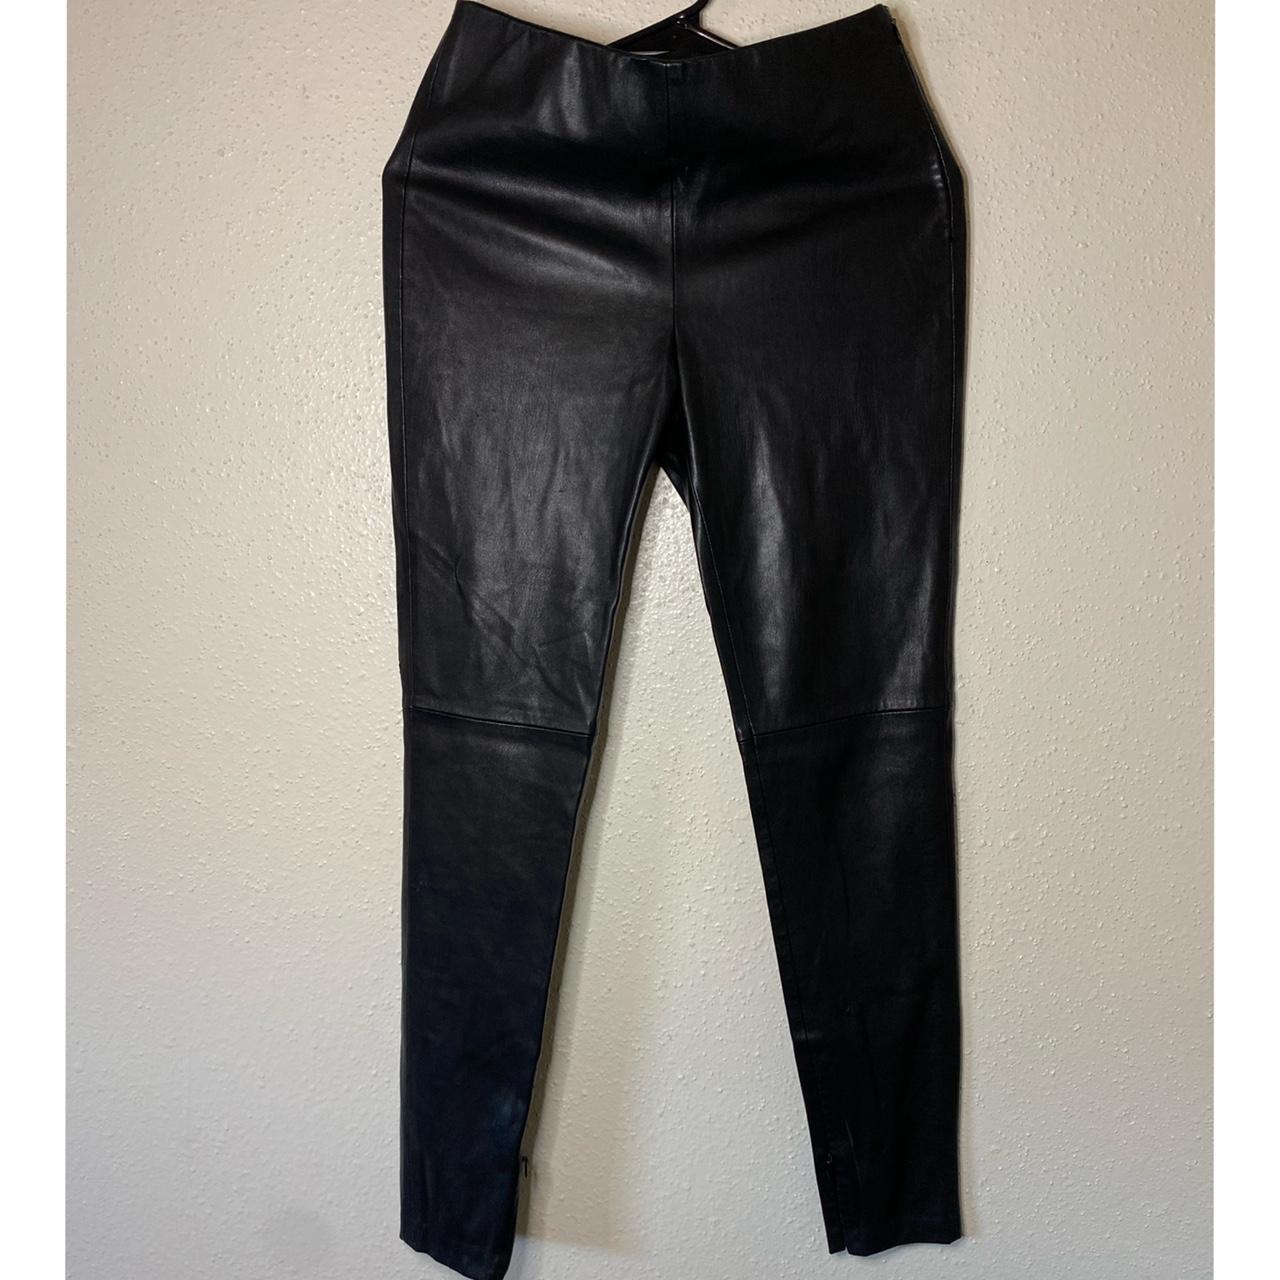 REPOP: Zara Basic faux leather pants/jegging 🕷 (has... - Depop